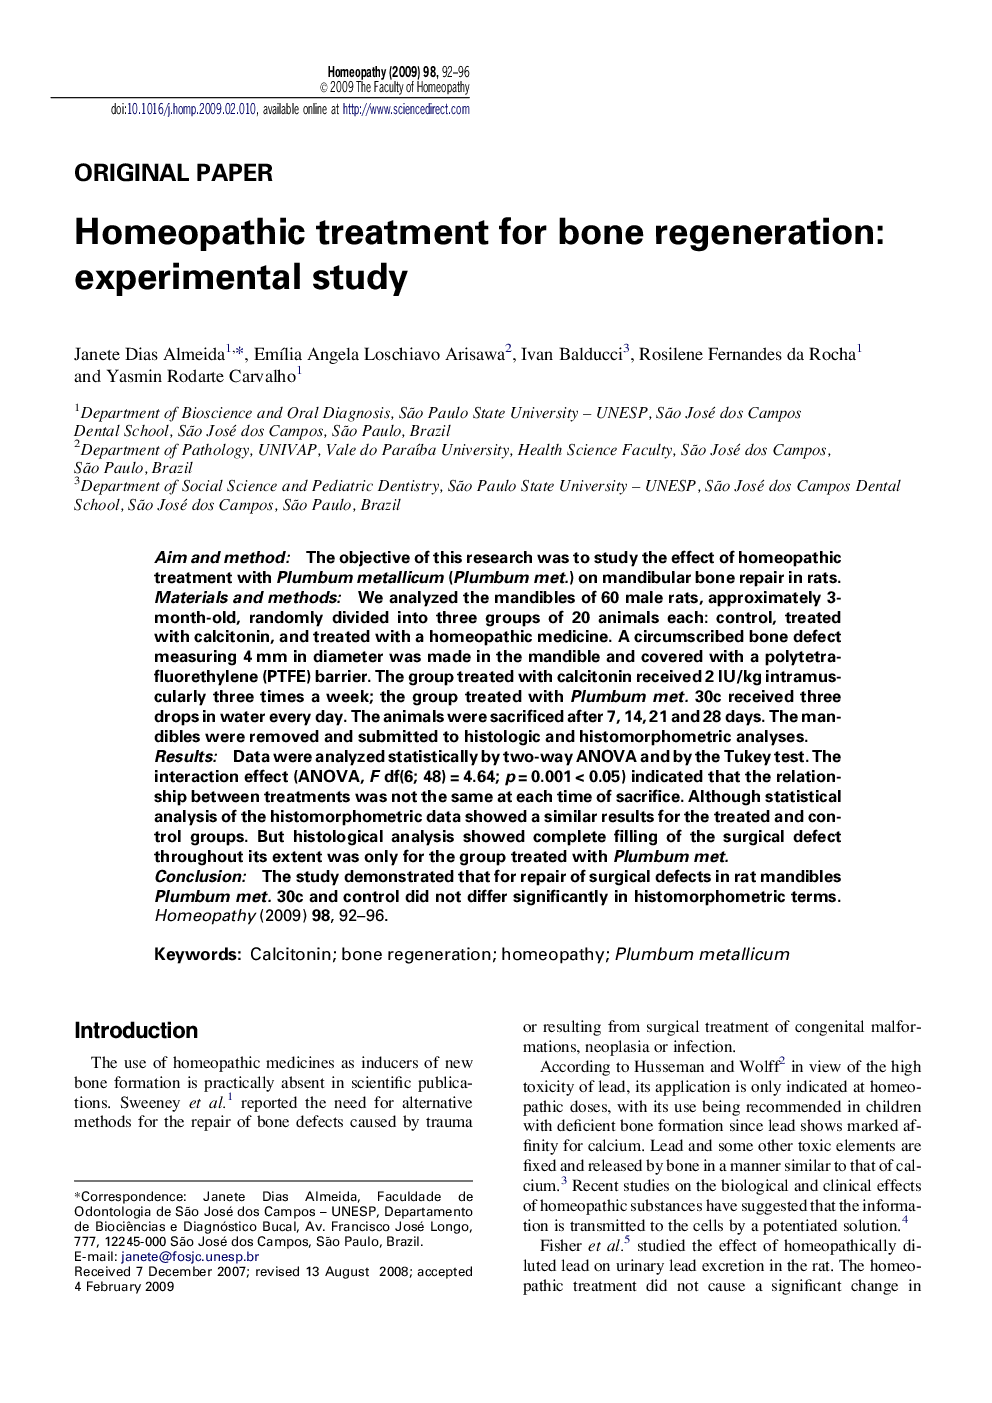 Homeopathic treatment for bone regeneration: experimental study